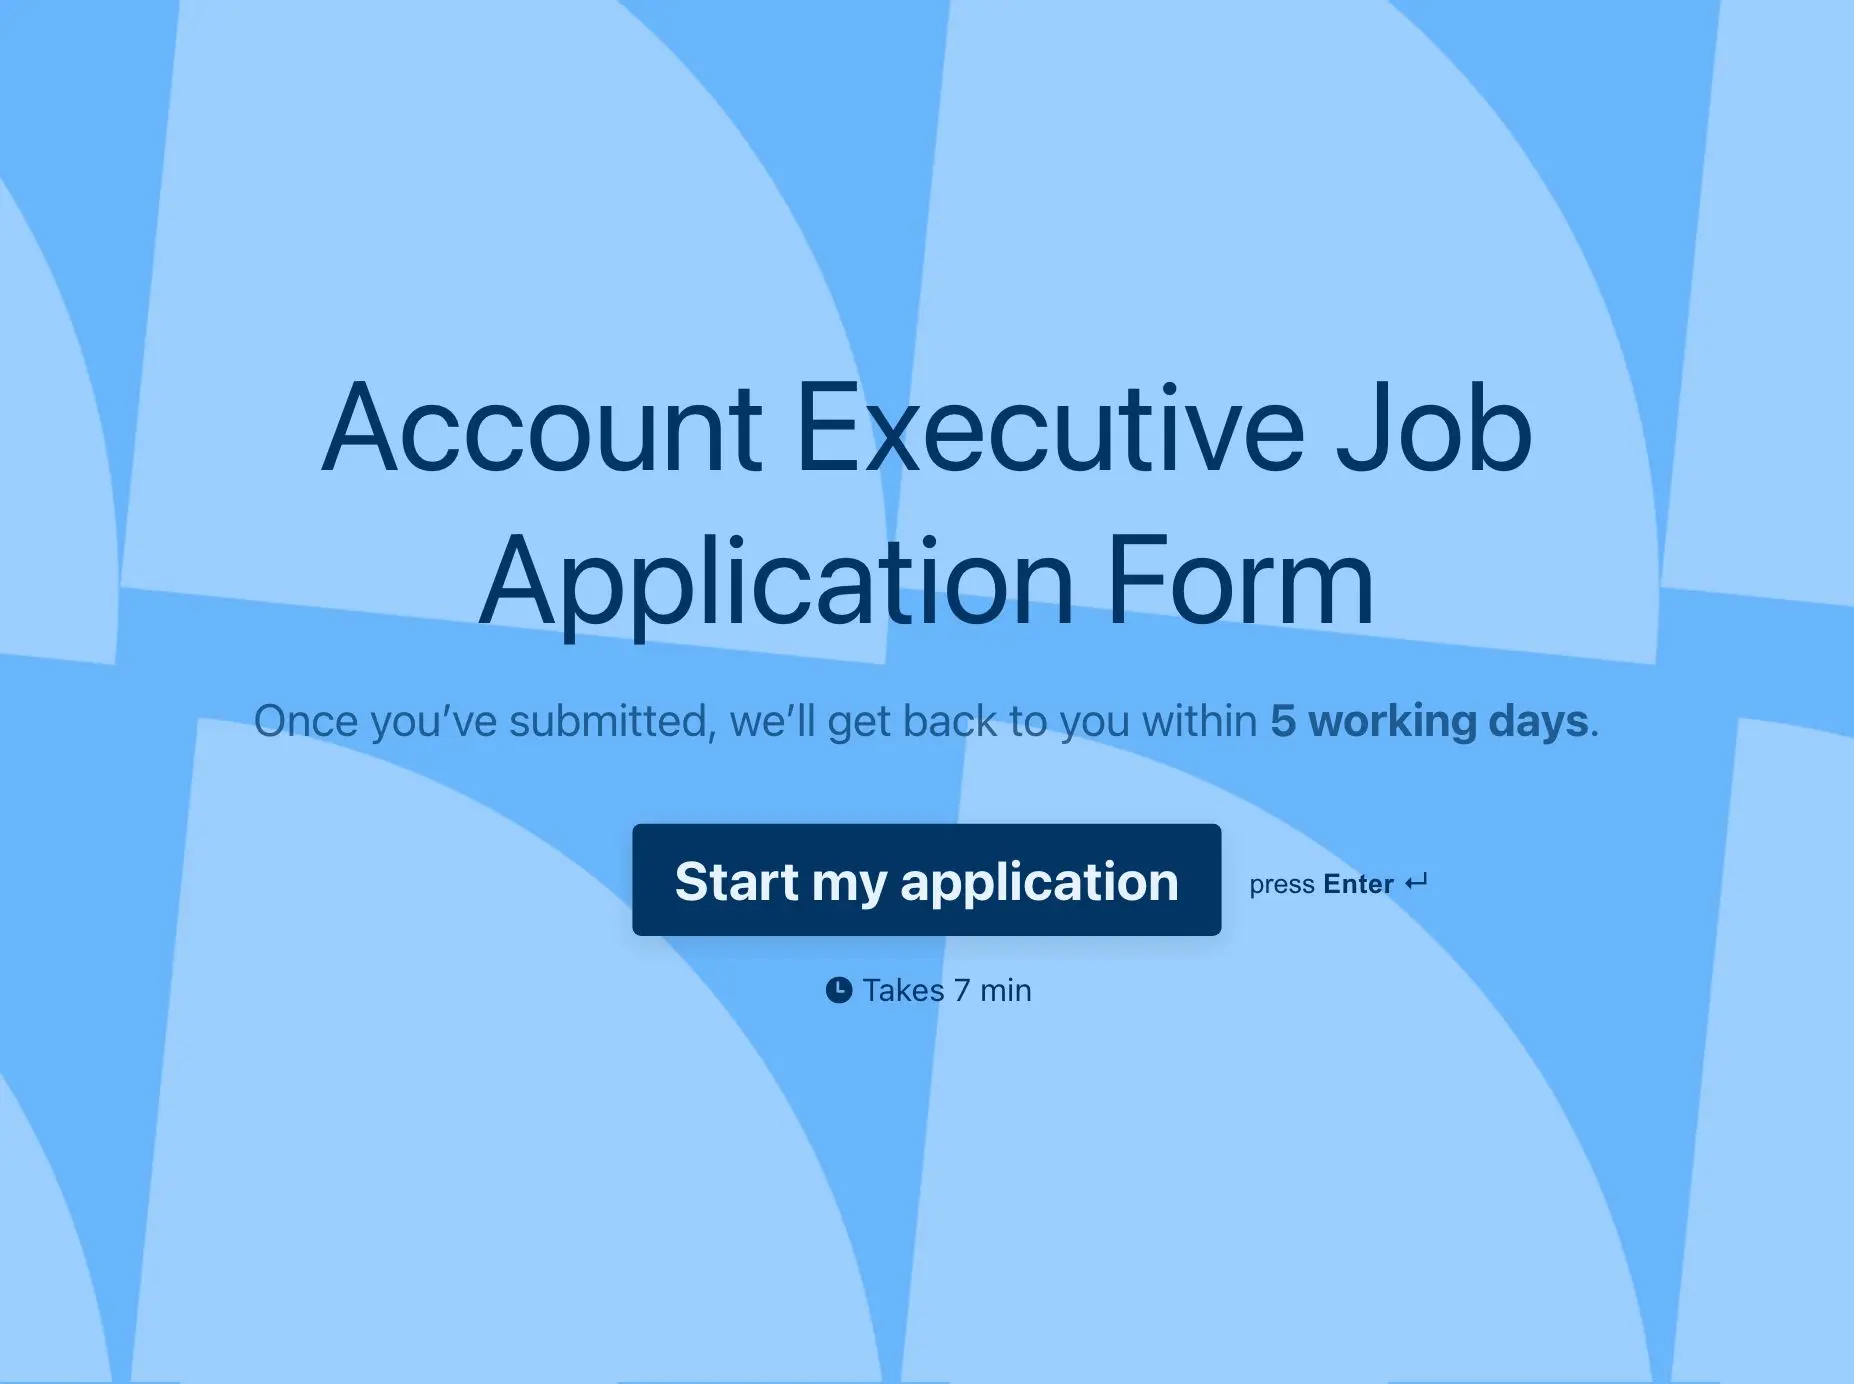 Account Executive Job Application Form Template Hero